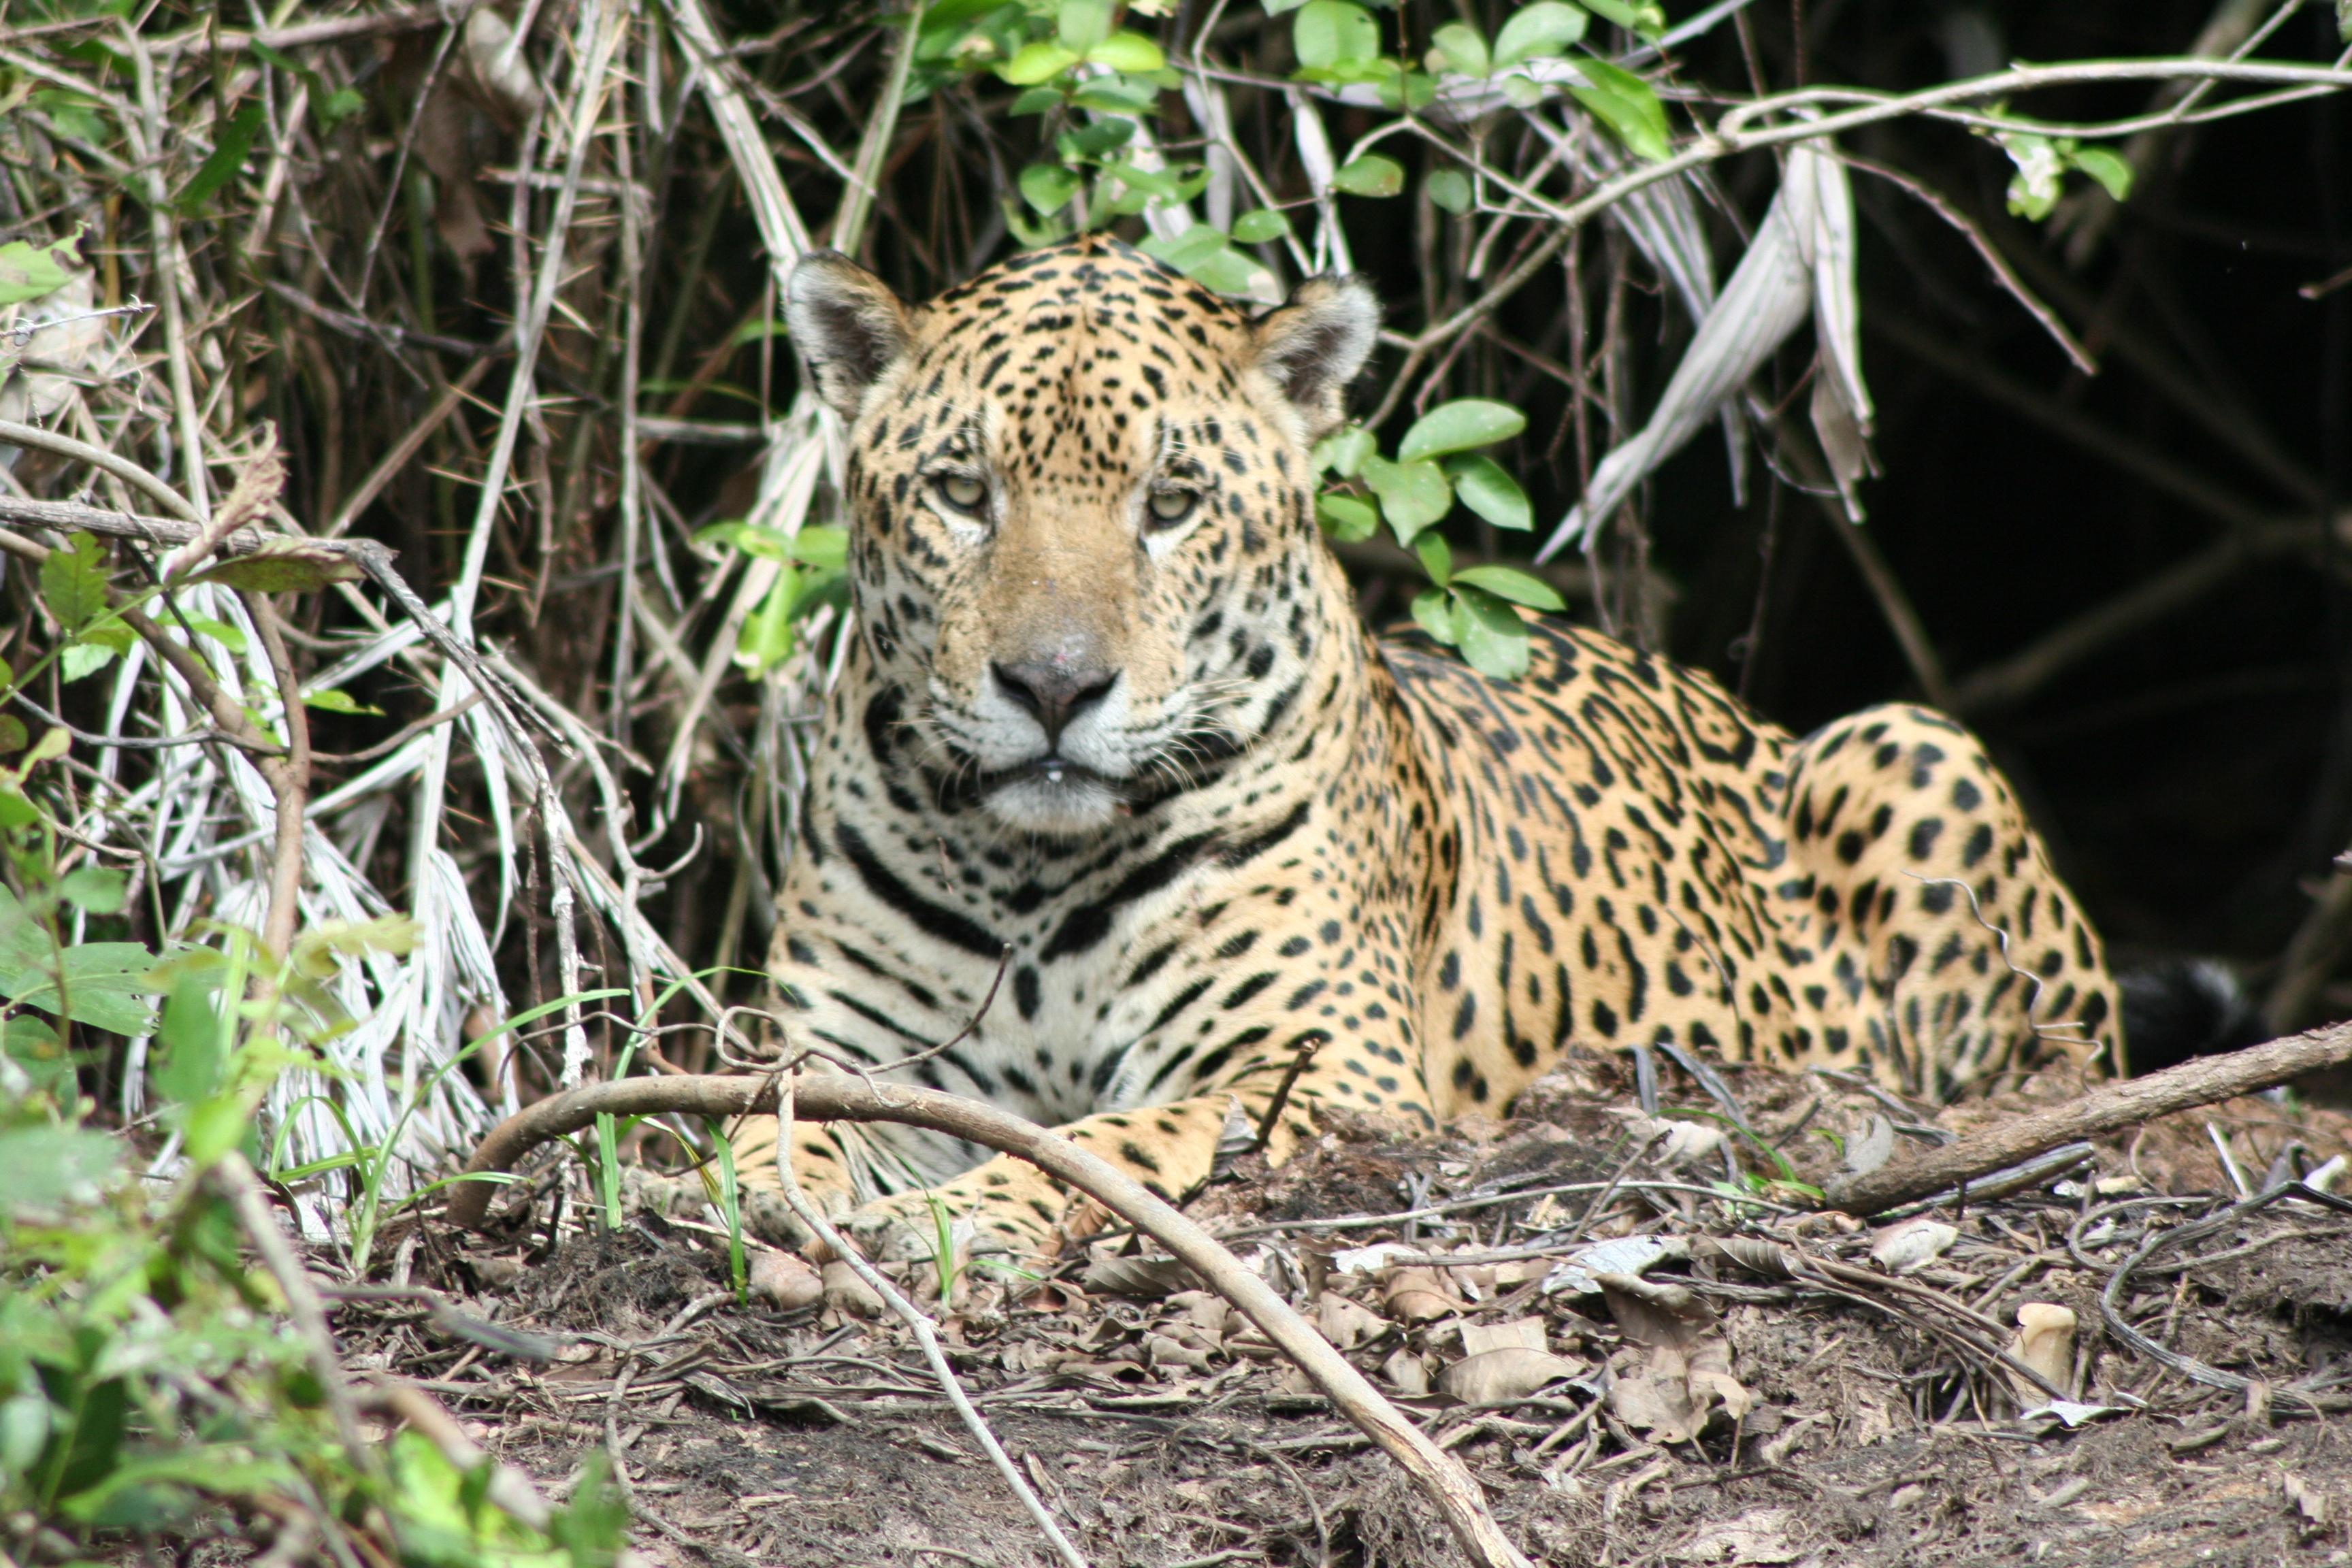 tourhub | Etours Brazil | Northern Pantanal & Jaguar Safari 